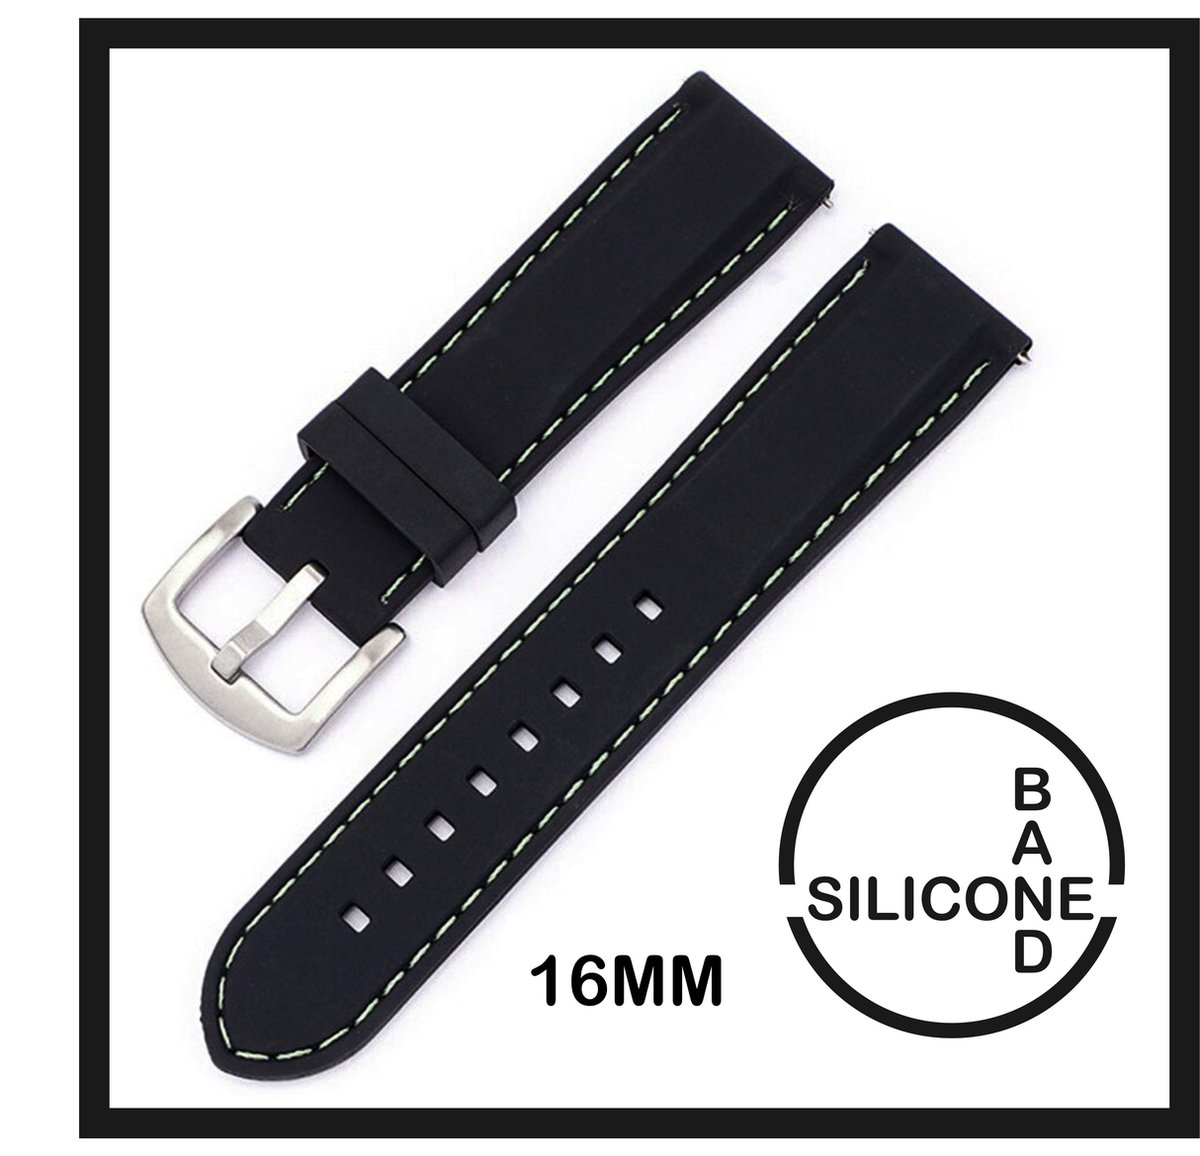 16mm Rubber Siliconen horlogeband Zwart met Witte stiksels passend op o.a Casio Seiko Citizen en alle andere merken - 16 mm Bandje - Horlogebandje horlogeband